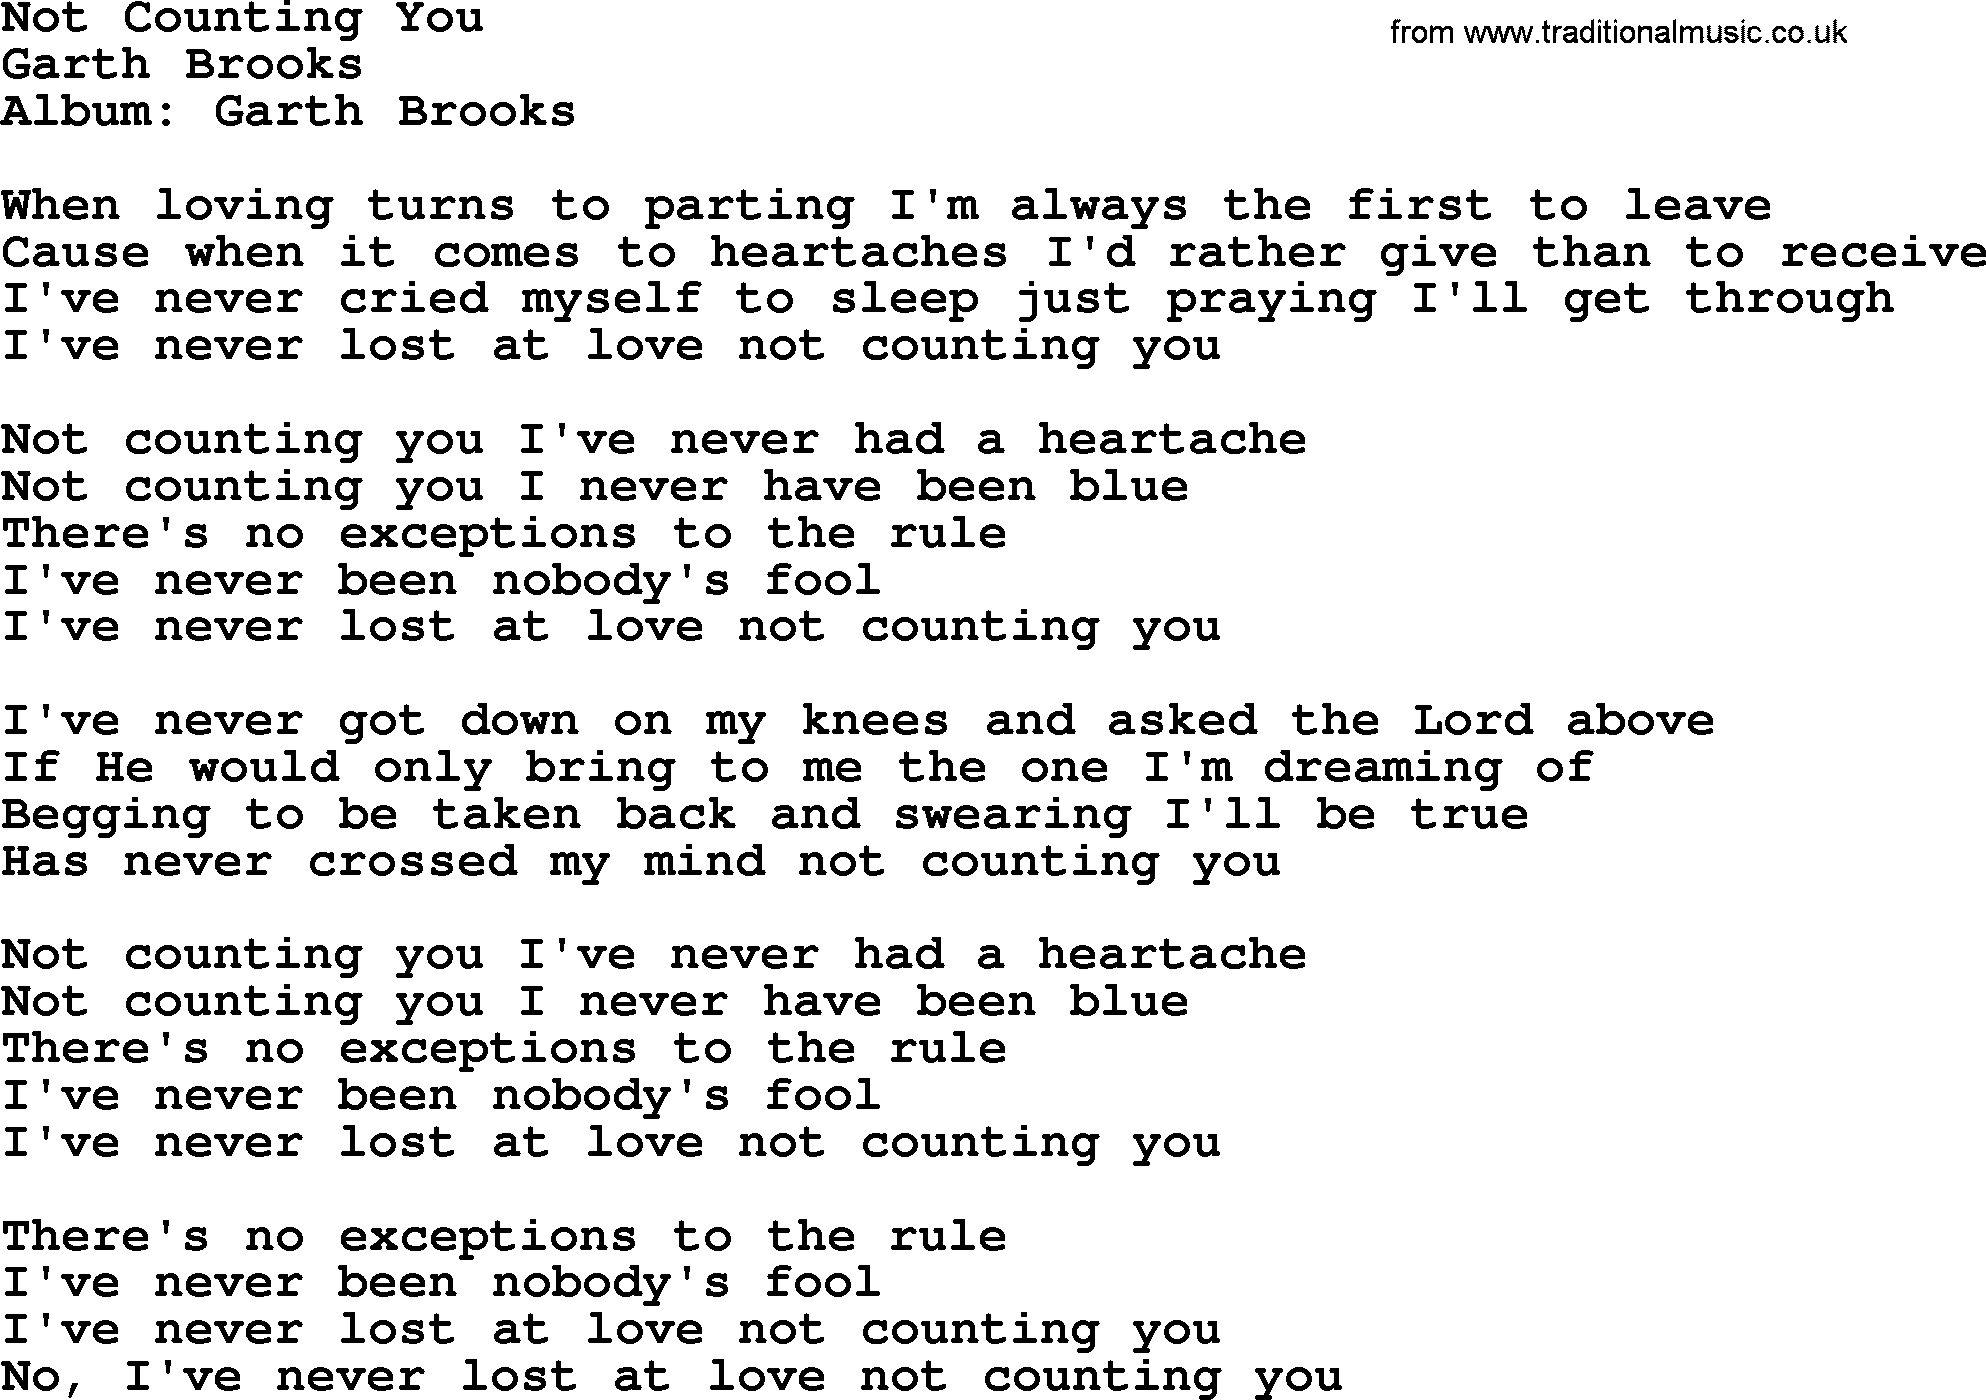 Garth Brooks song: Not Counting You, lyrics